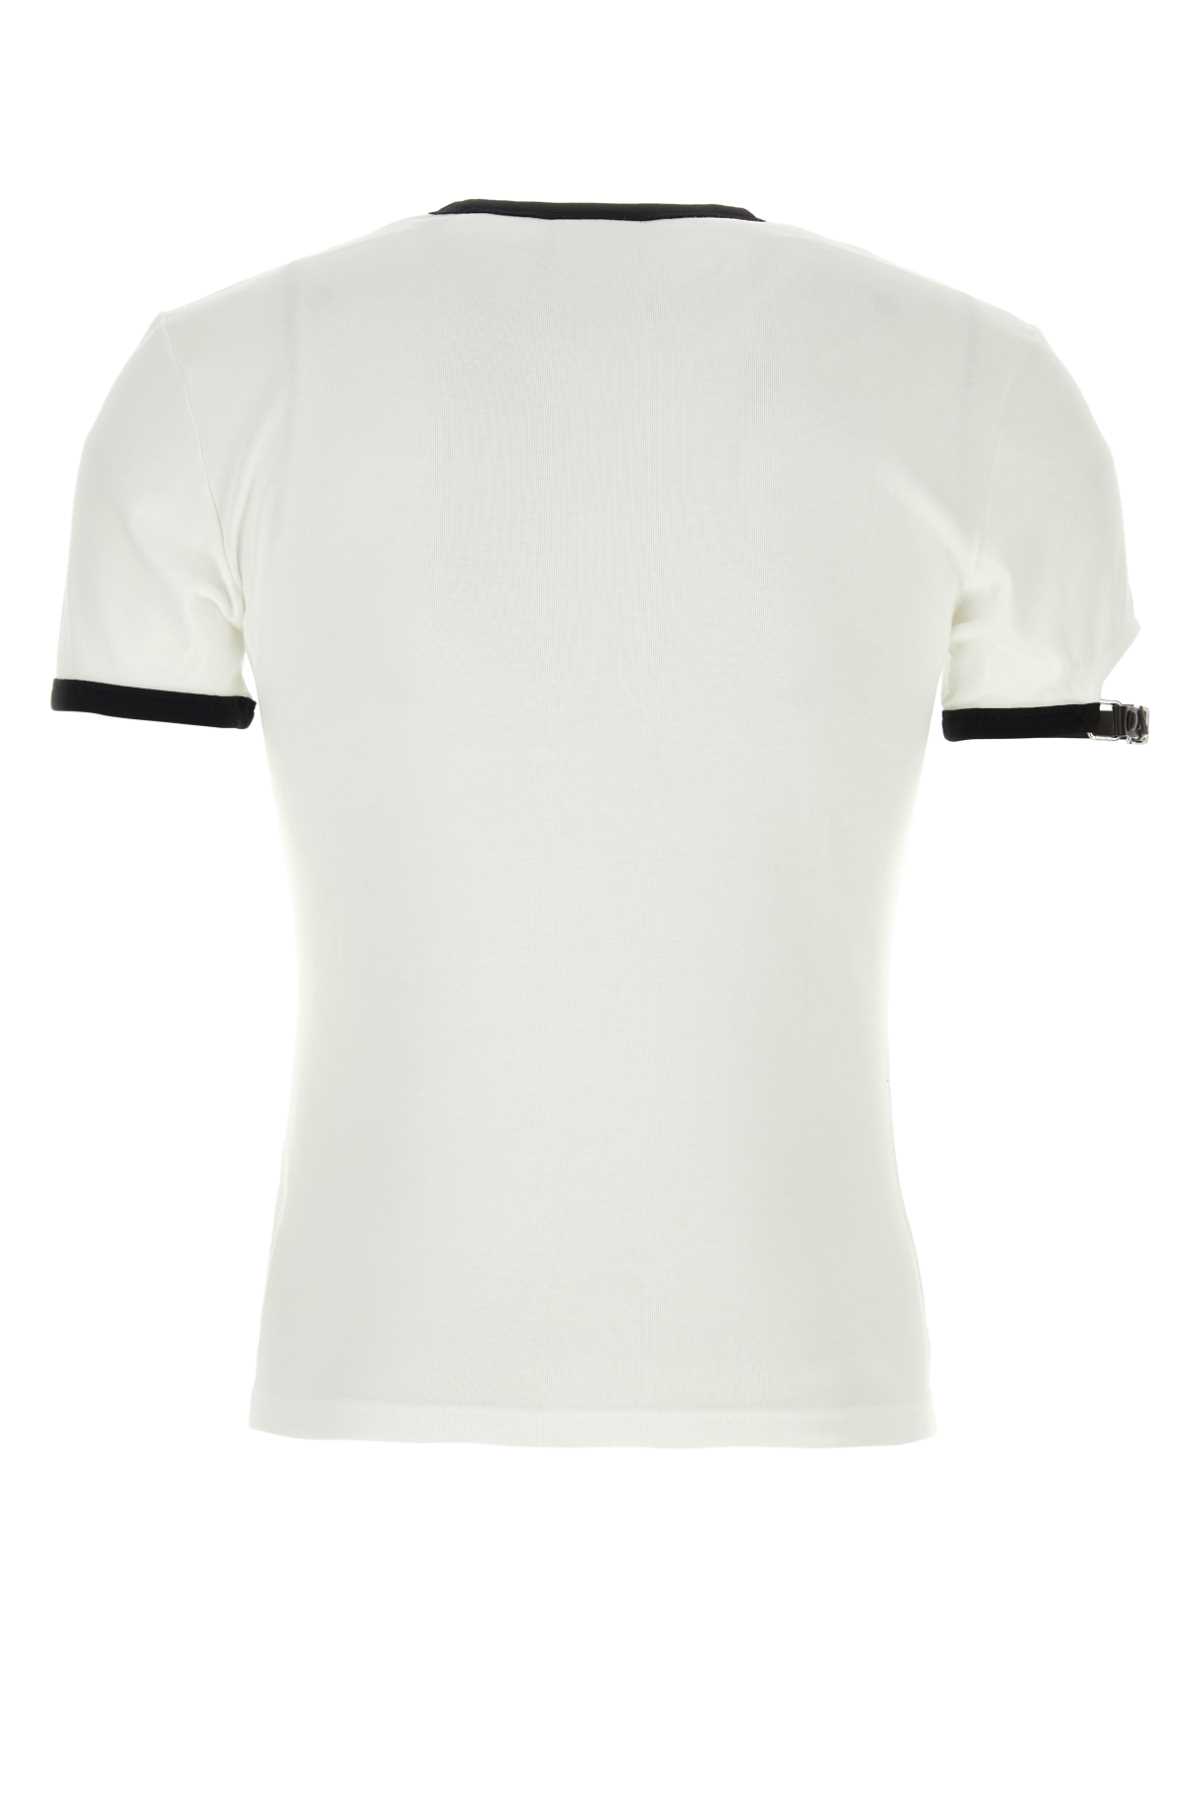 Courrèges White Cotton T-shirt In Heritagewhiteblack